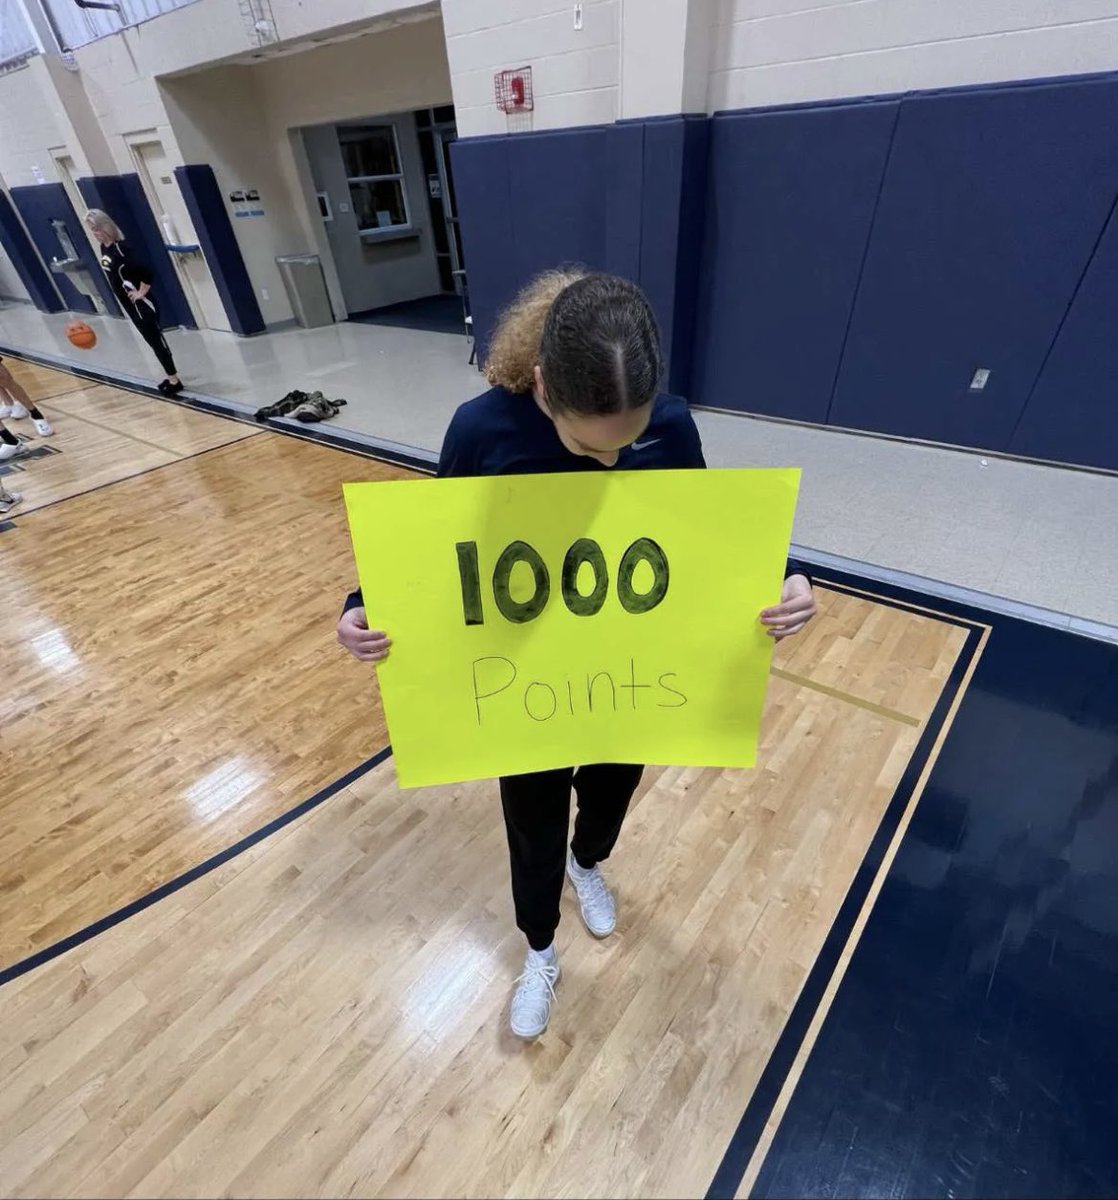 1,000 point clubbb😁 #roadtostate @Coach_Willboam